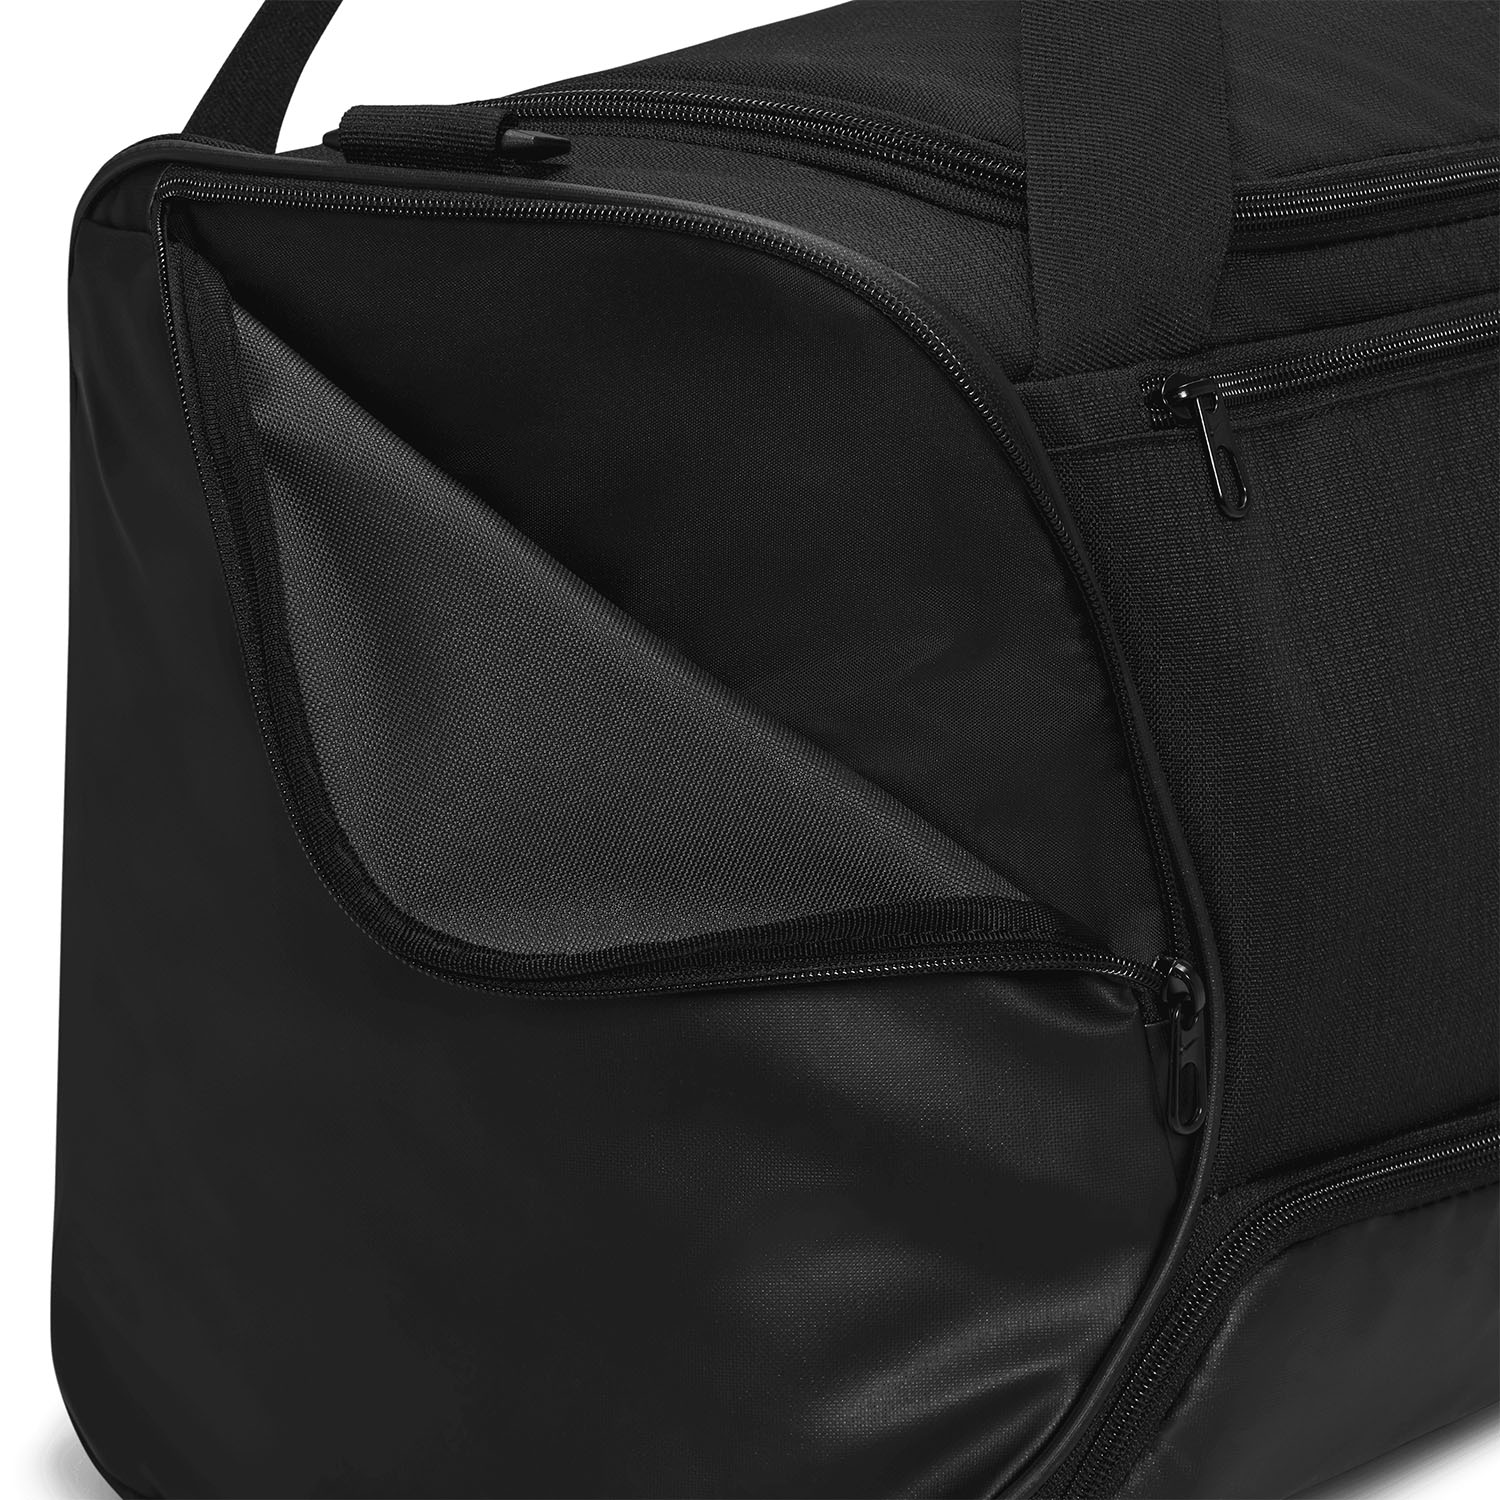 Nike Brasilia Medium Duffel Bag - Royal